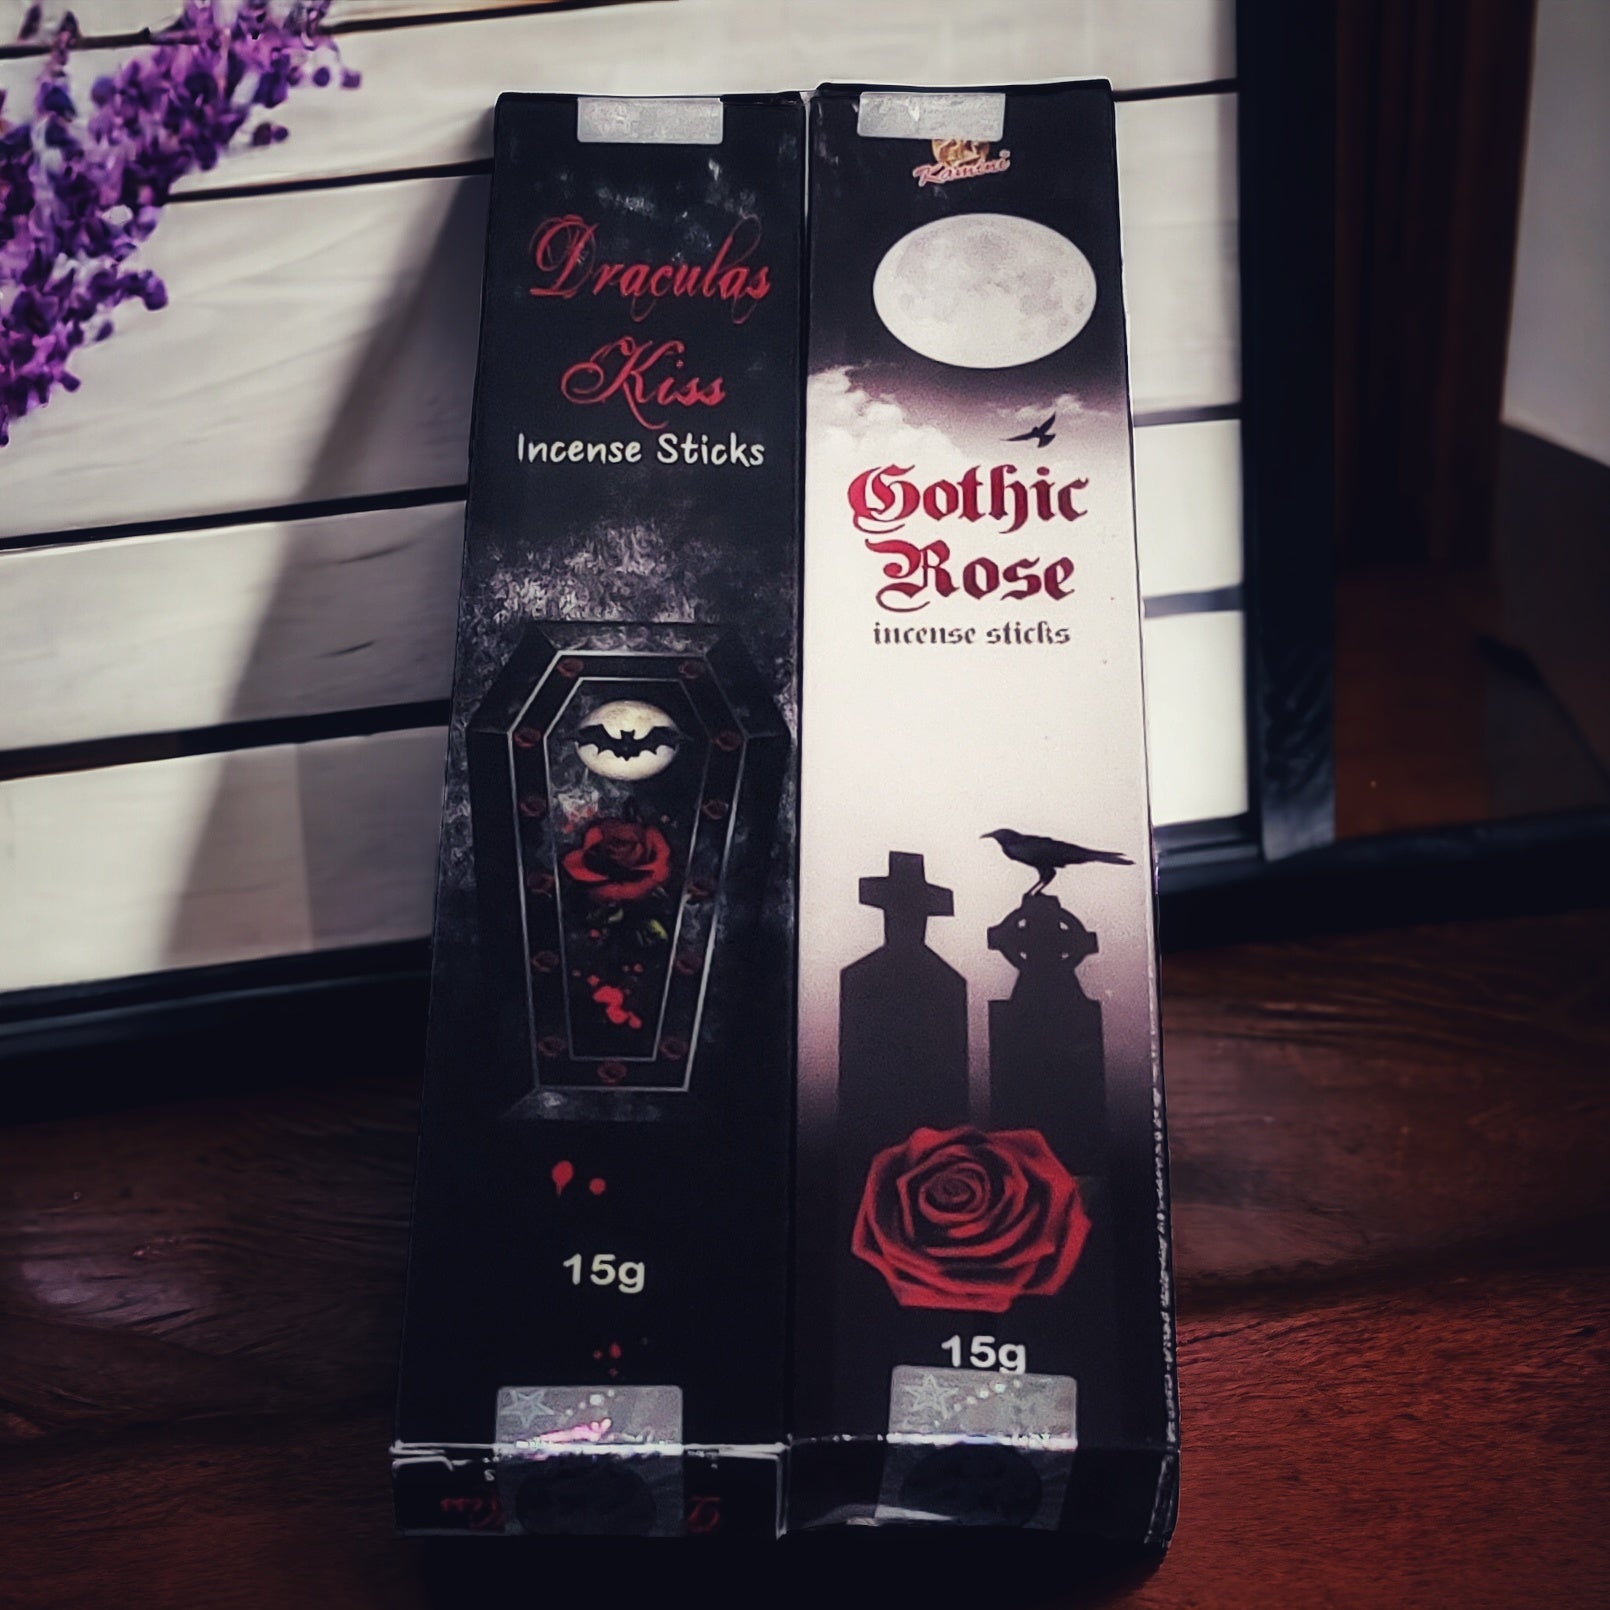 Gothic rose incense value pack